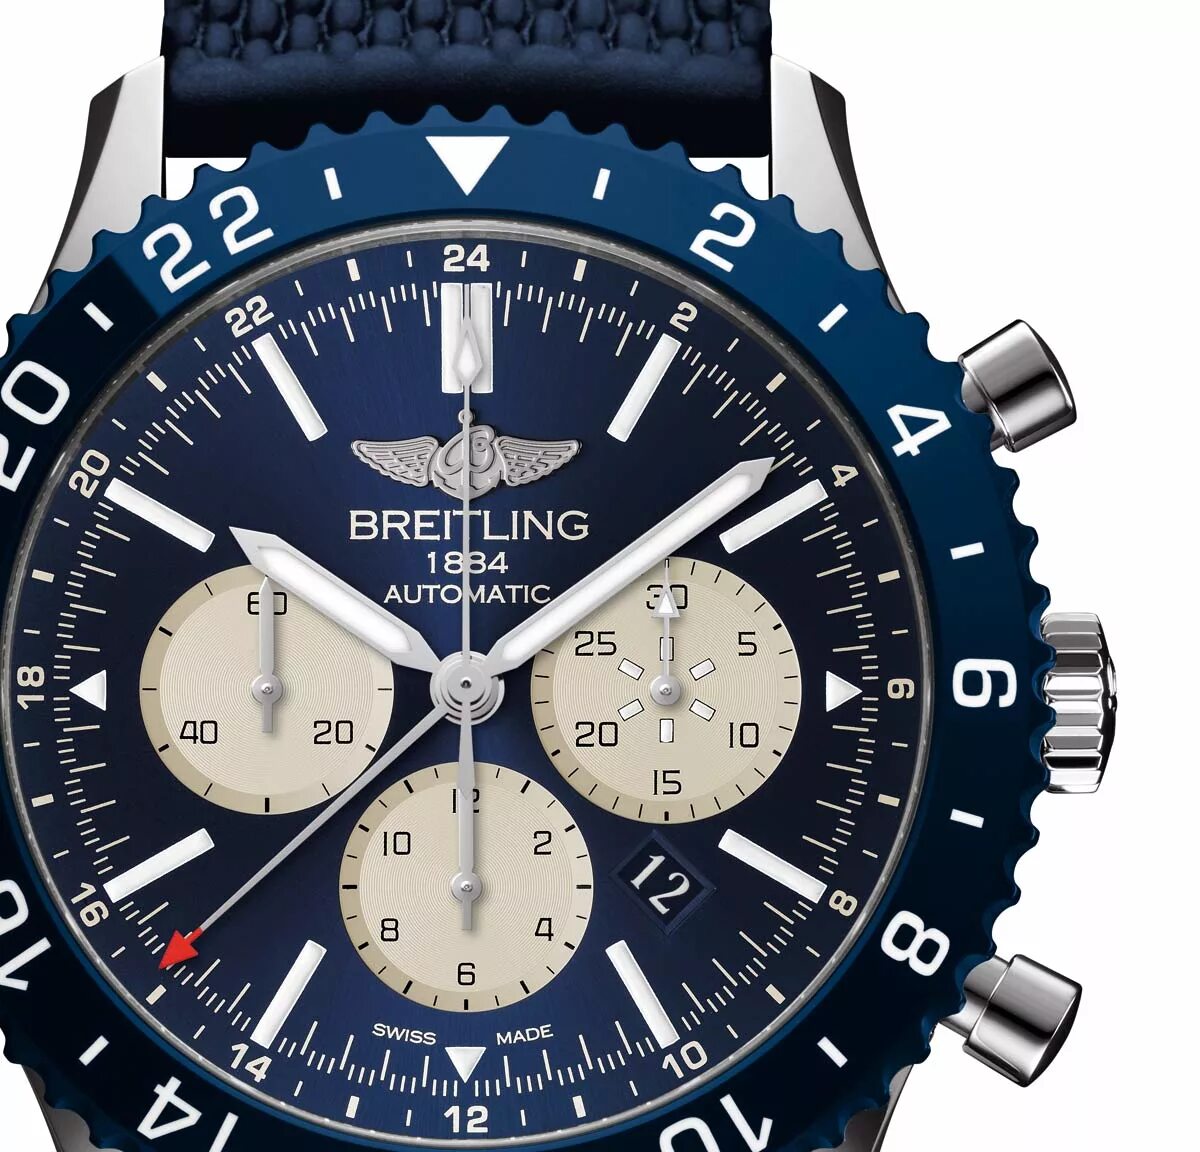 Breitling часы мужские a74387. Breitling часы мужские a13313. Breitling часы мужские Chronographe. Breitling a23870. Часы breitling оригинал